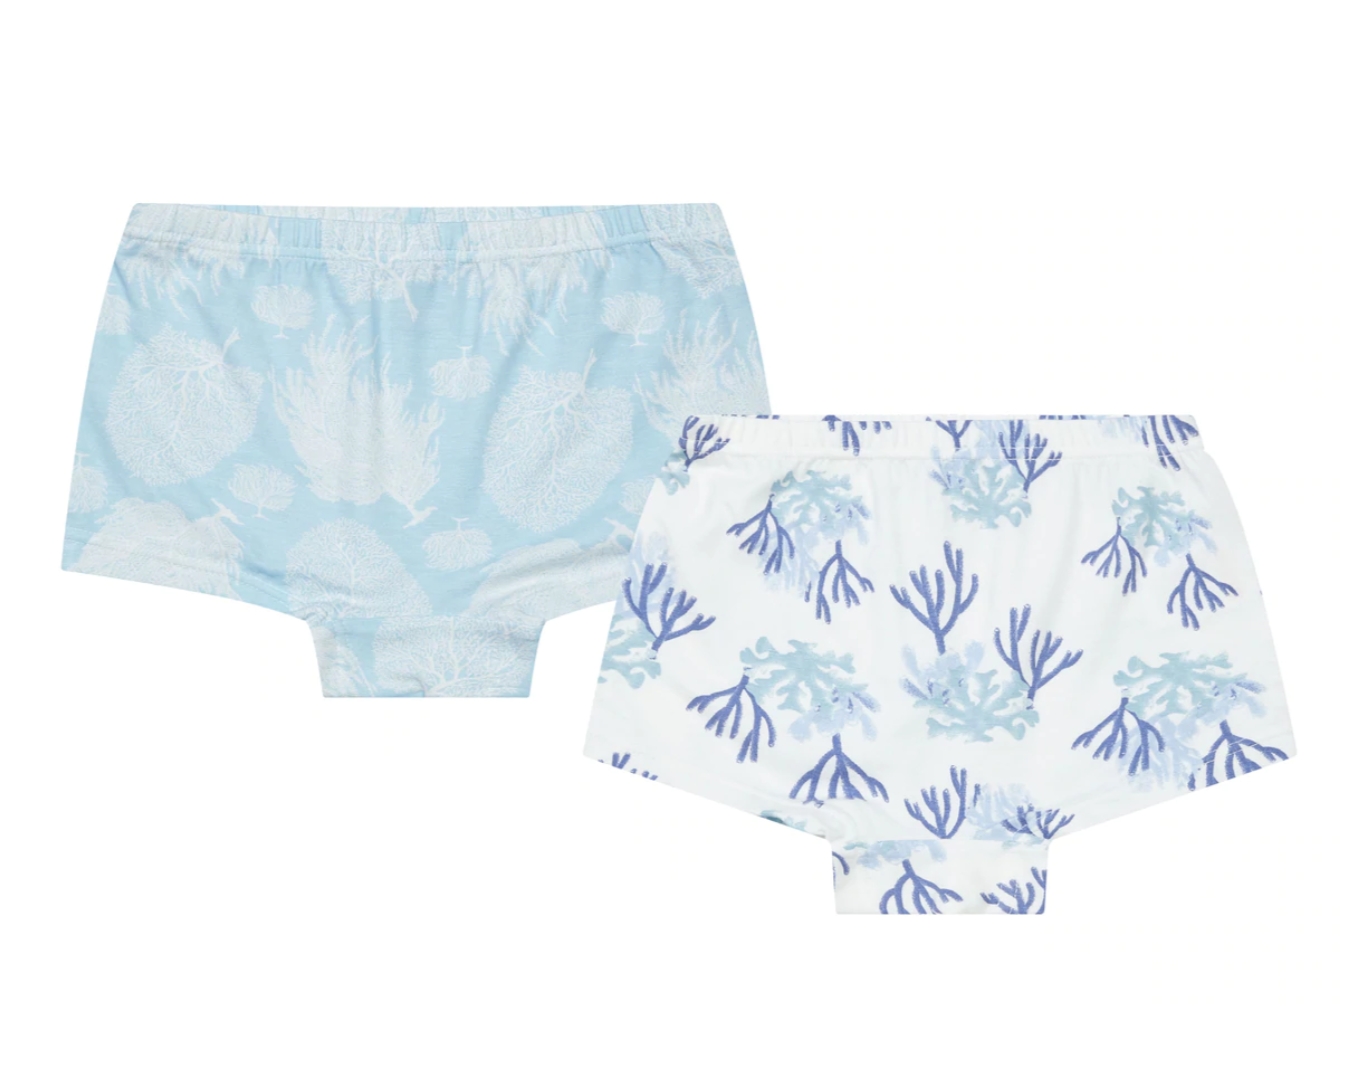 Bamboo Girls Boy Short Underwear (2 Pack) - Coralife (7-8Y Only)